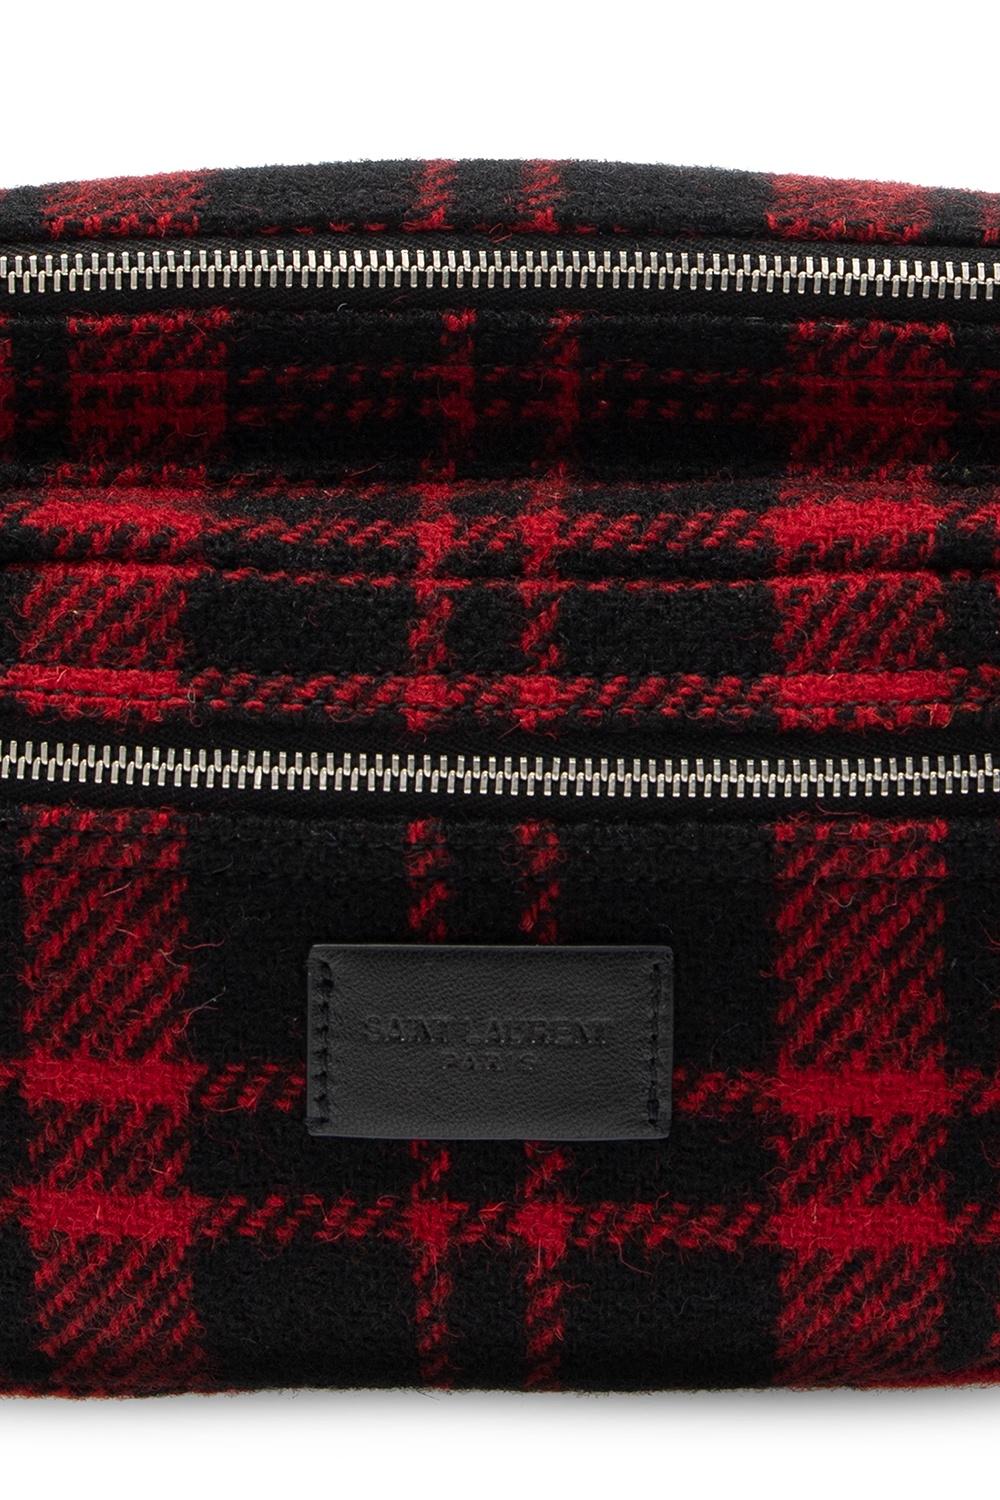 Saint Laurent Red Black Wool Tartan Nuxx Belt Bag For Sale 2